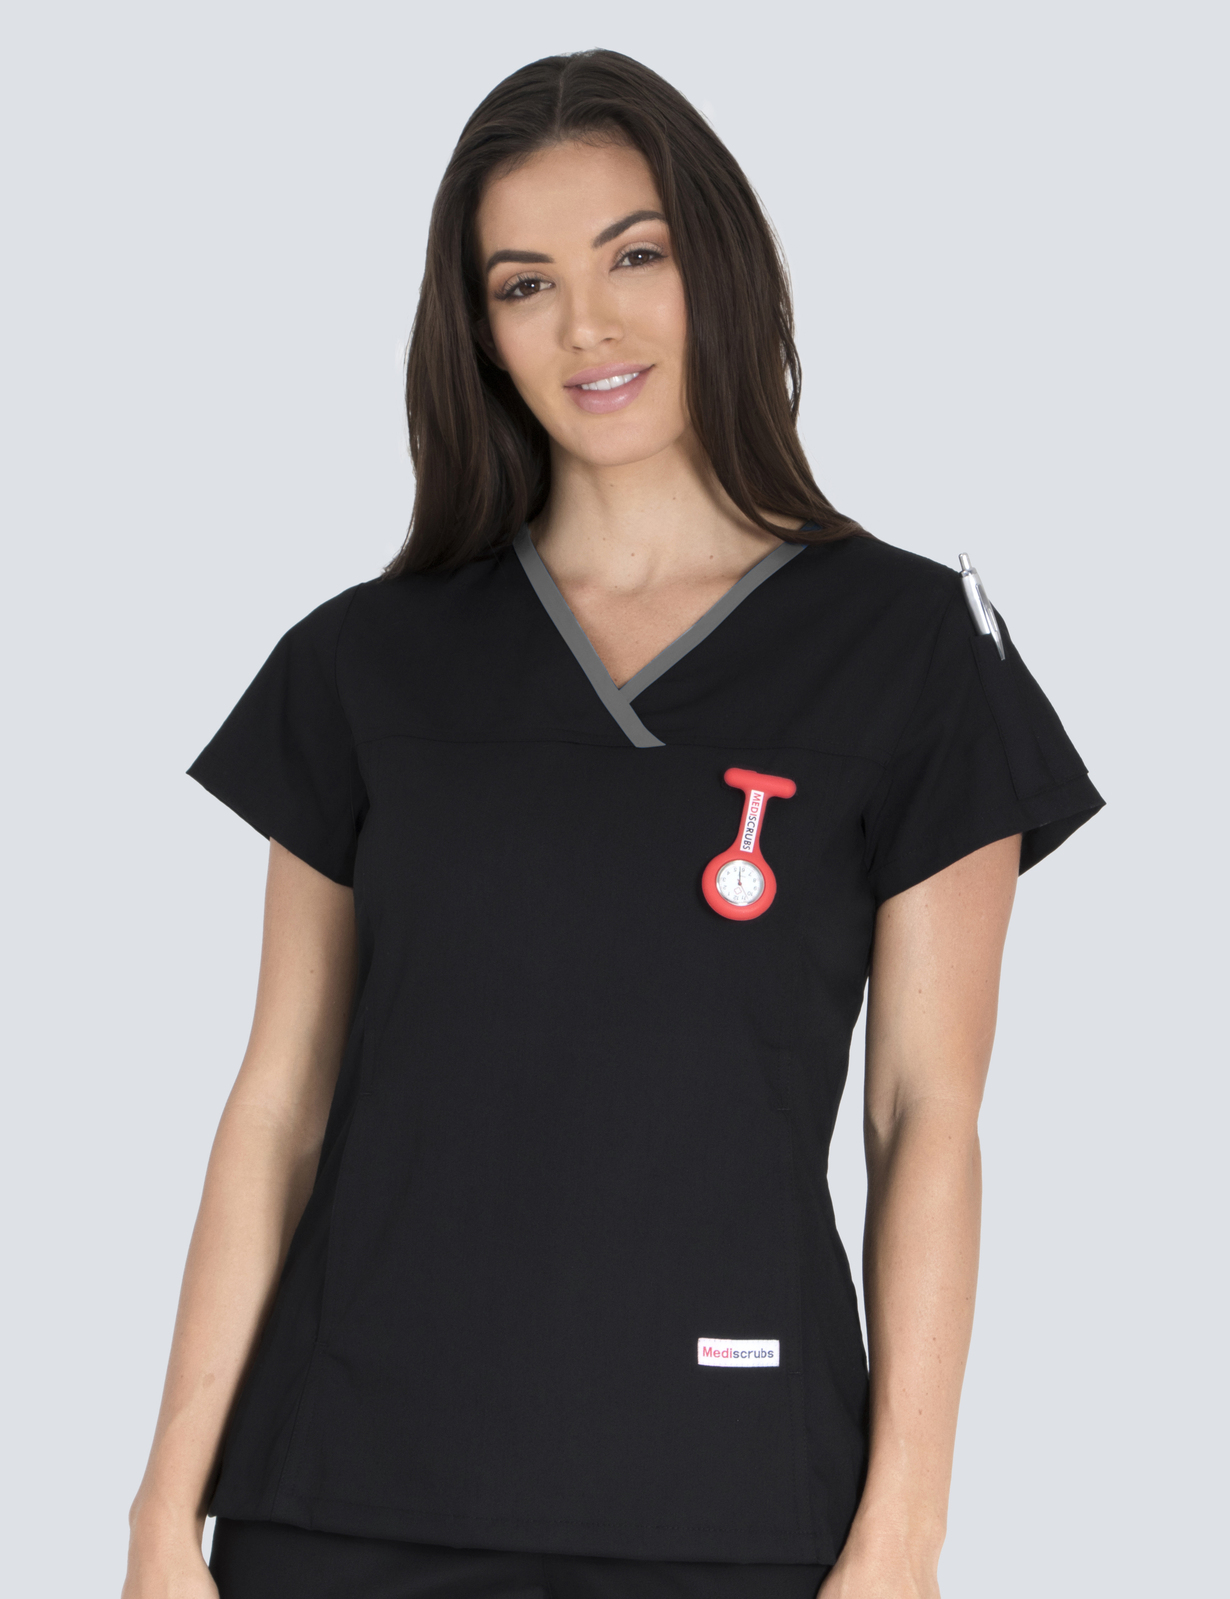 Launceston General Hospital - MI - Sonographer- With Trim - Women's Fit X 2 Logos Bundle